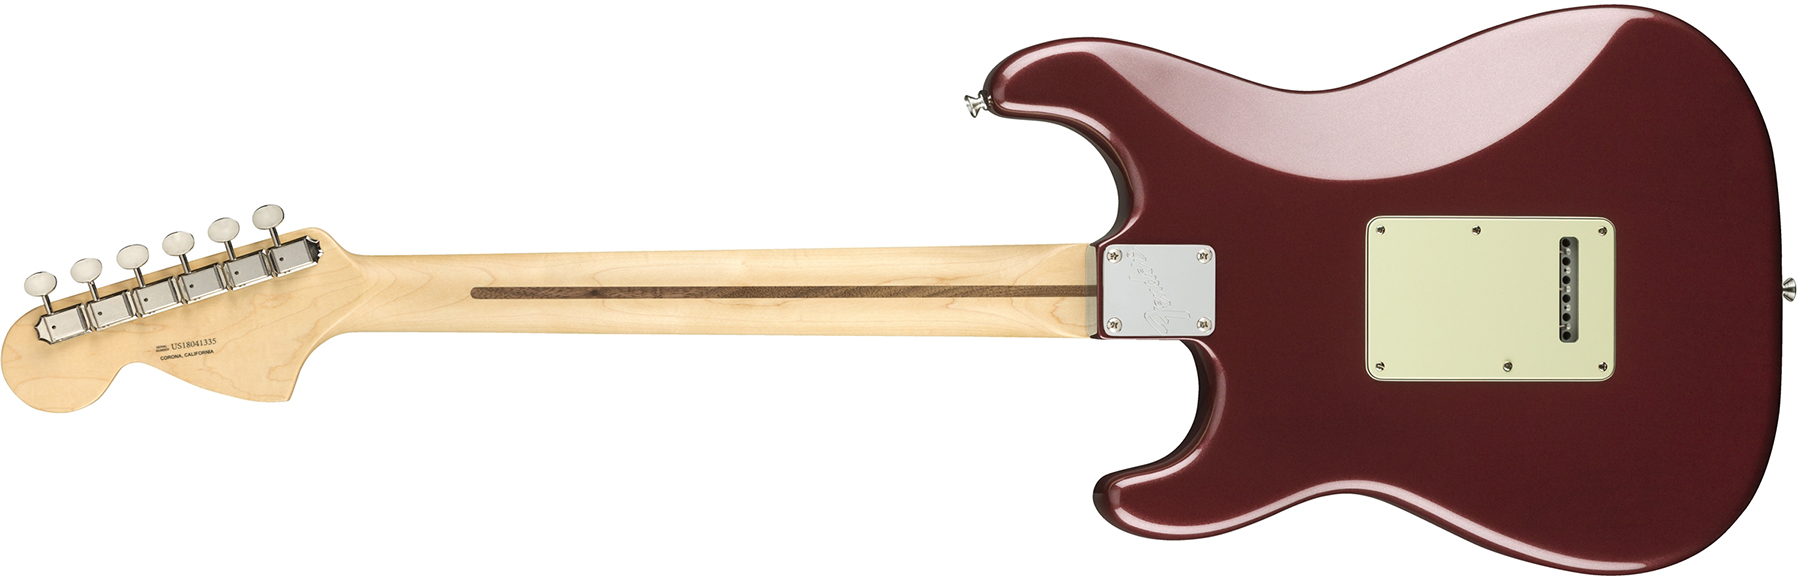 Fender Strat American Performer Usa Hss Rw - Aubergine - E-Gitarre in Str-Form - Variation 1